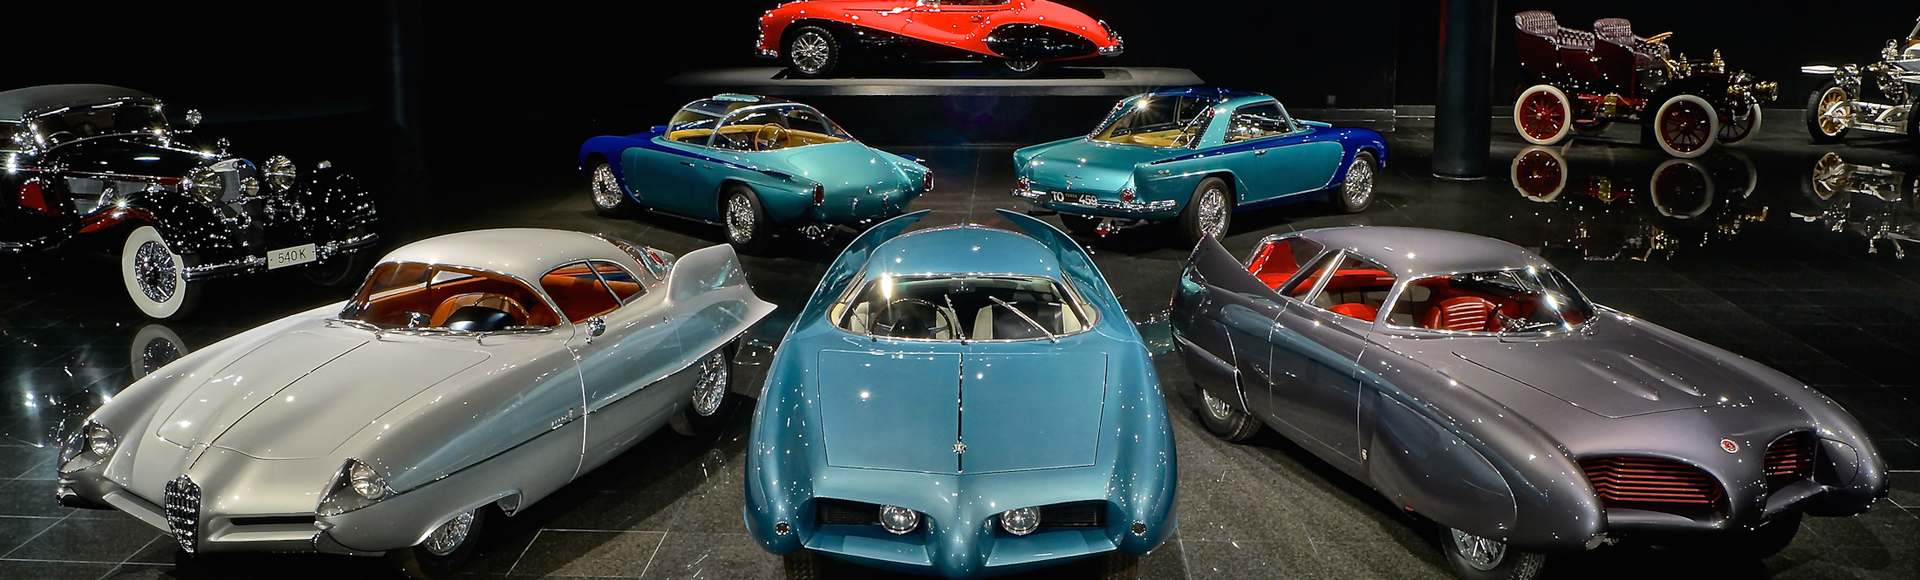 Blackhawk Museum (The Classic Car Collection)